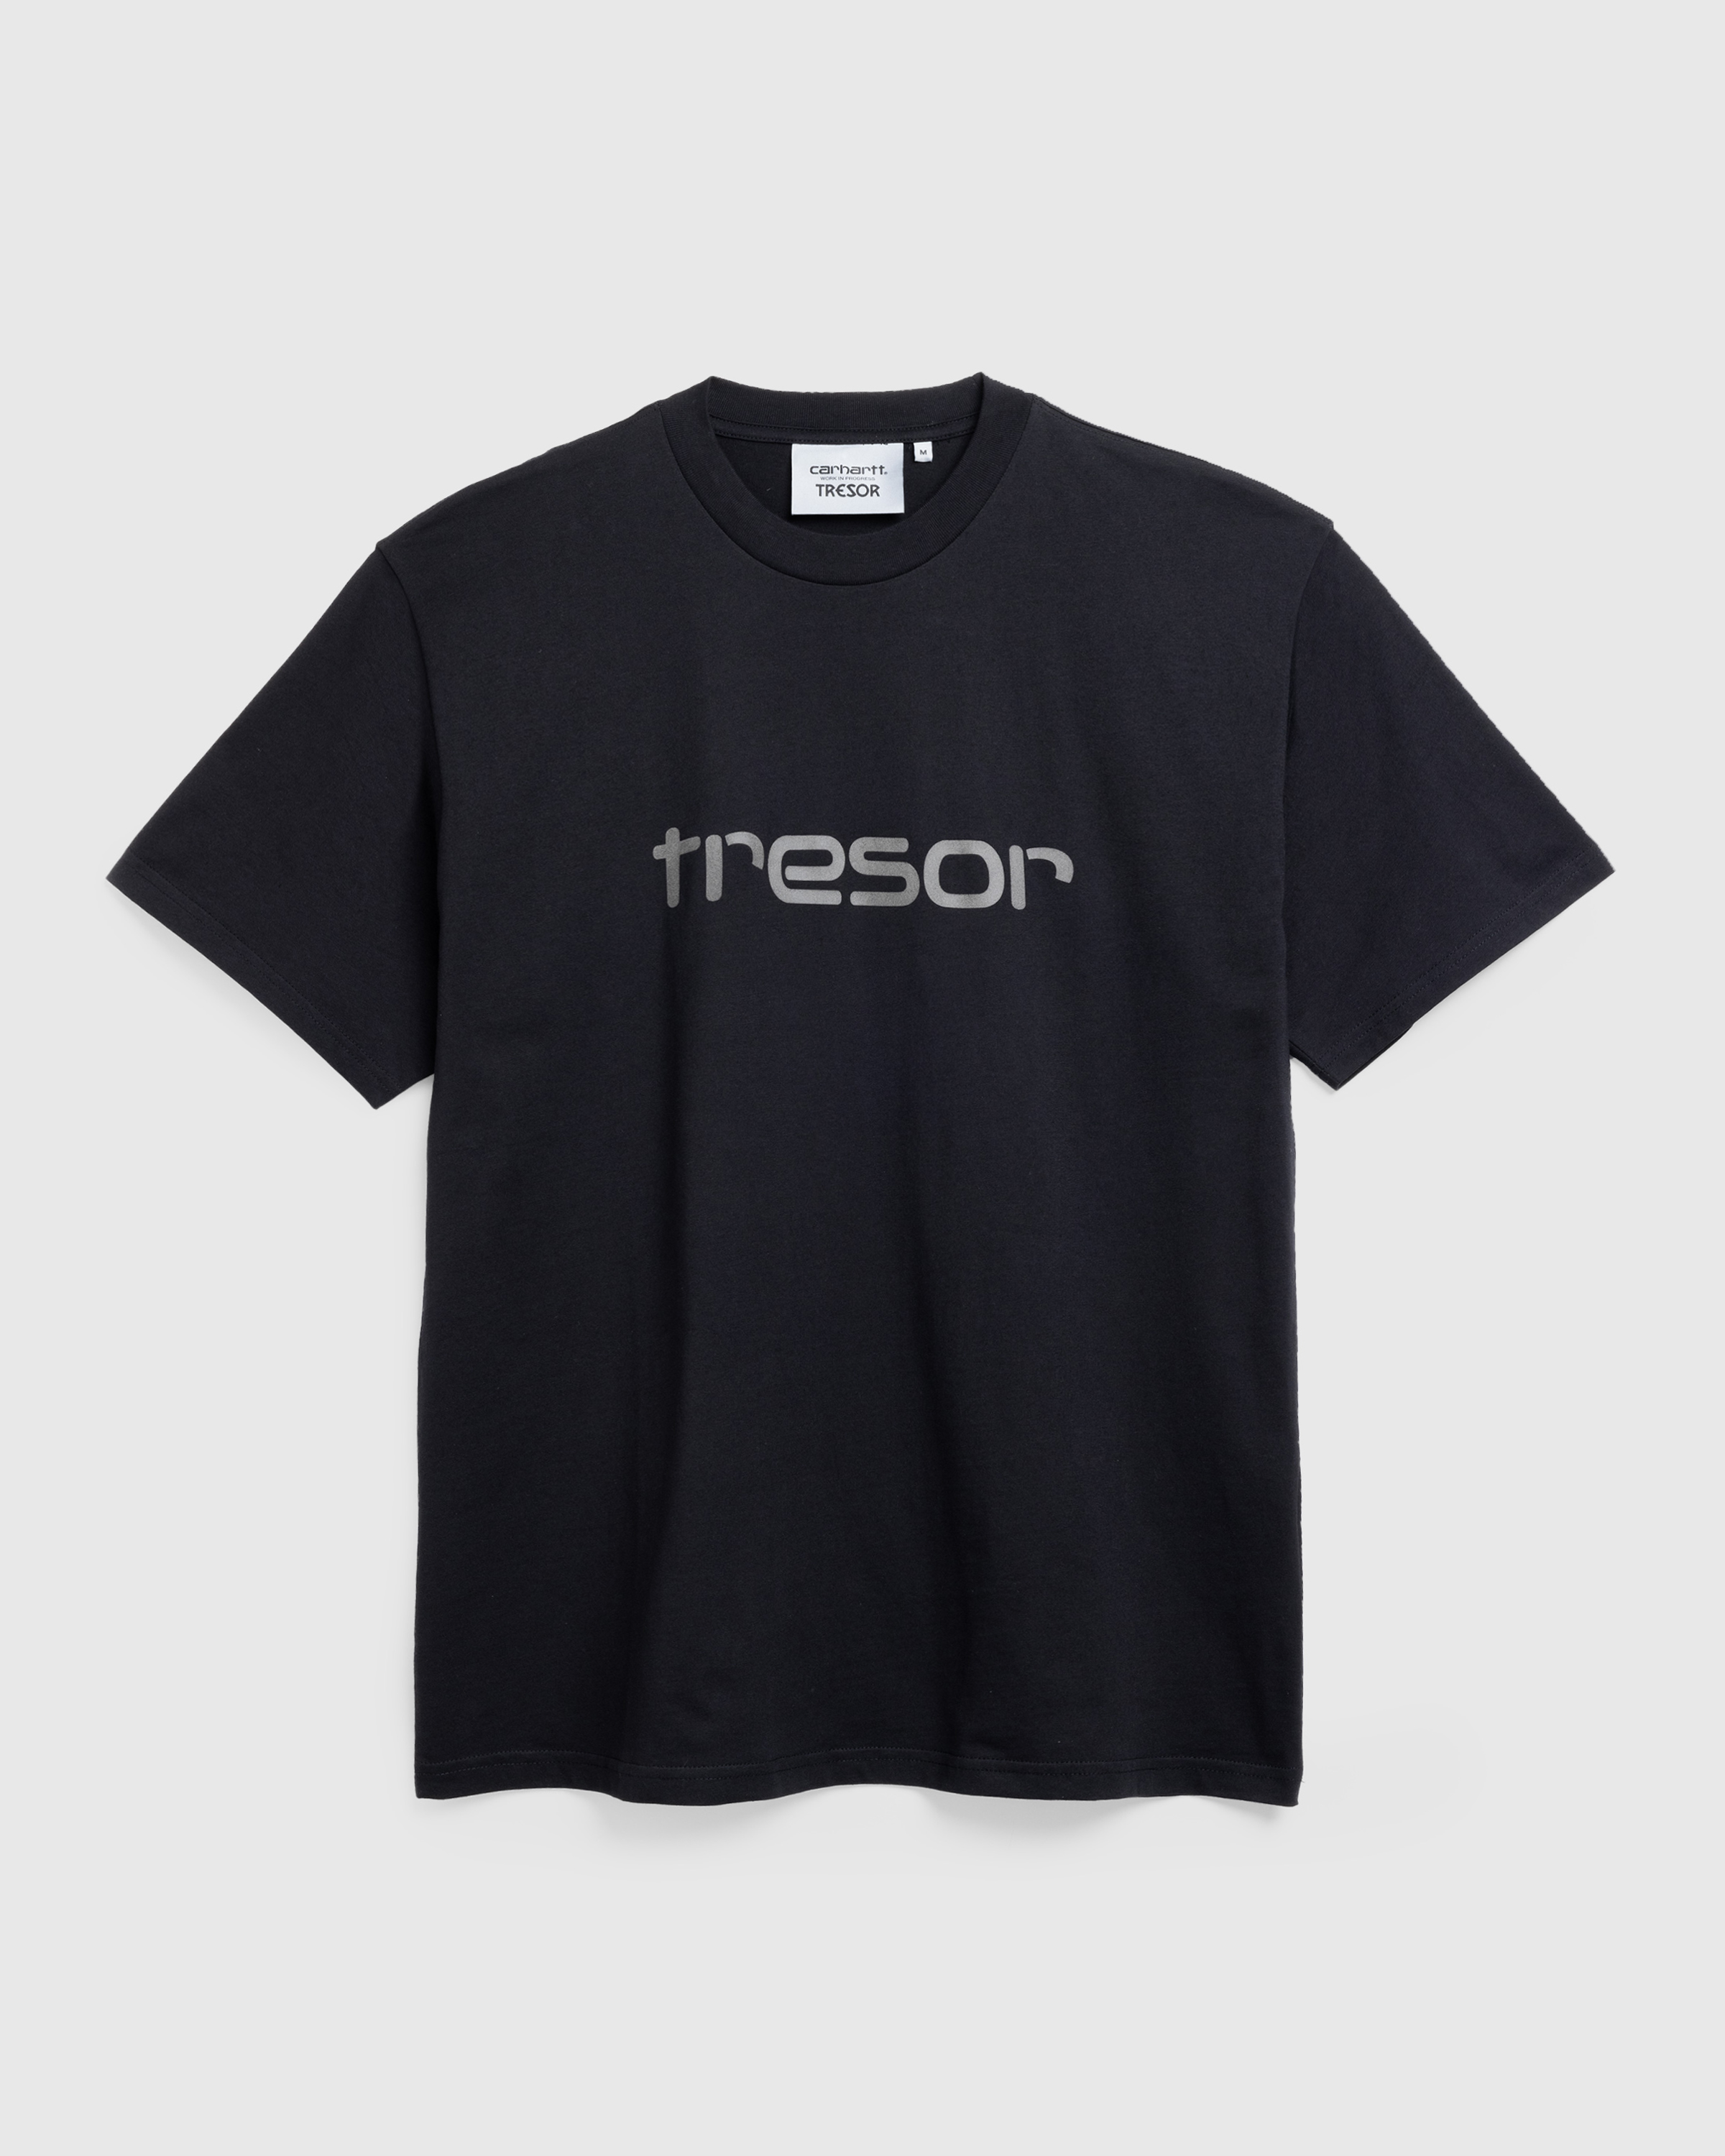 Carhartt WIP x Tresor – Techno Alliance S/S T-Shirt Black/Dark Grey Reflective - Tops - Black - Image 1